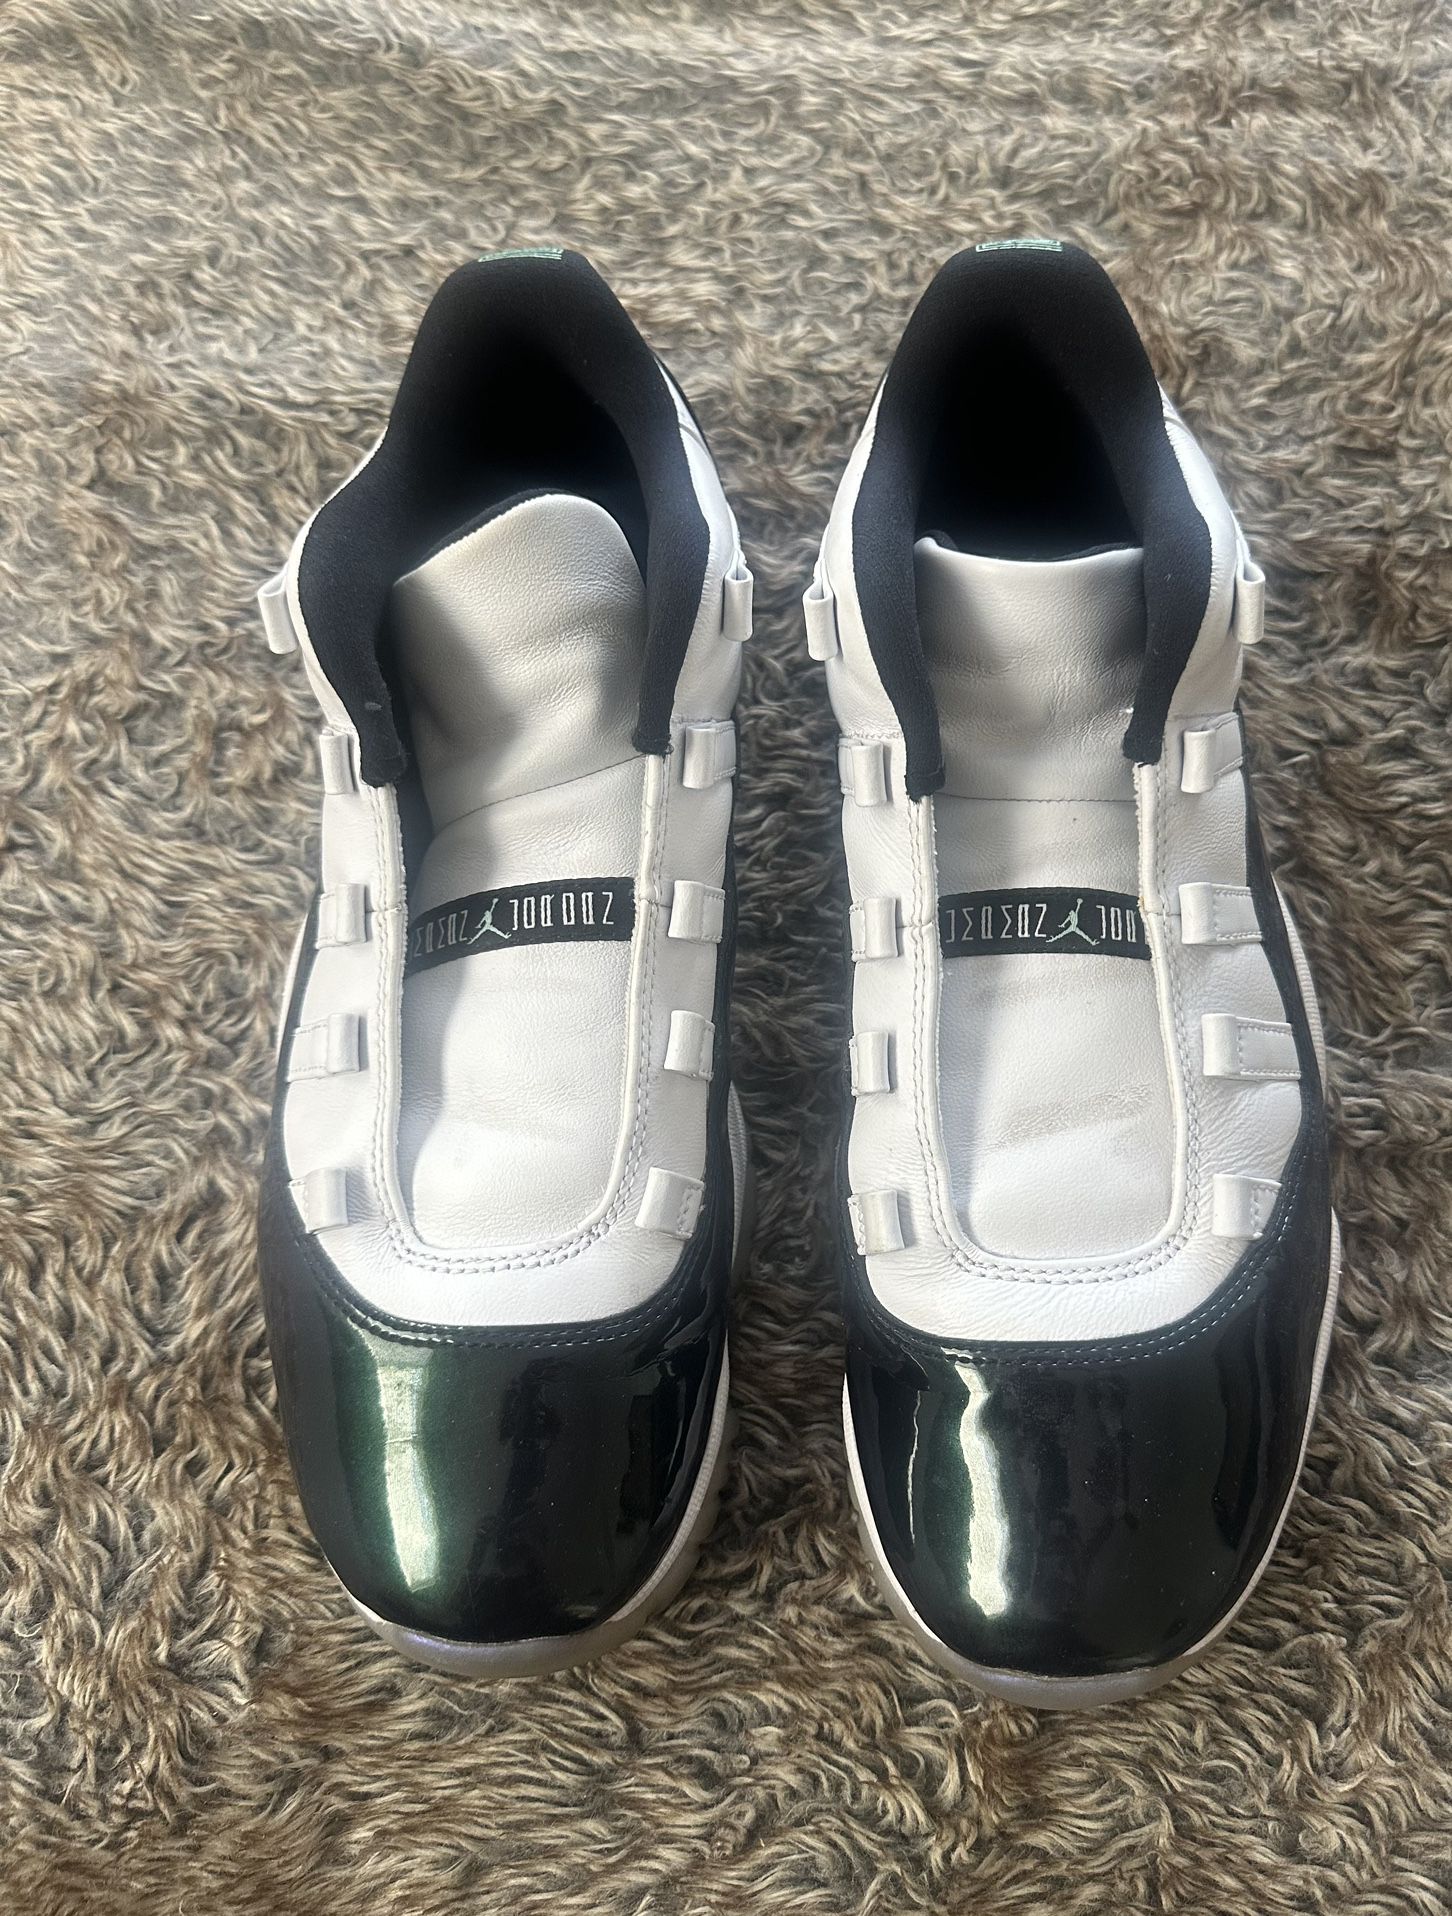 Air Jordan 11 Retro Low Men’s Size 10, Very Good Condition, Includes Box, No Laces